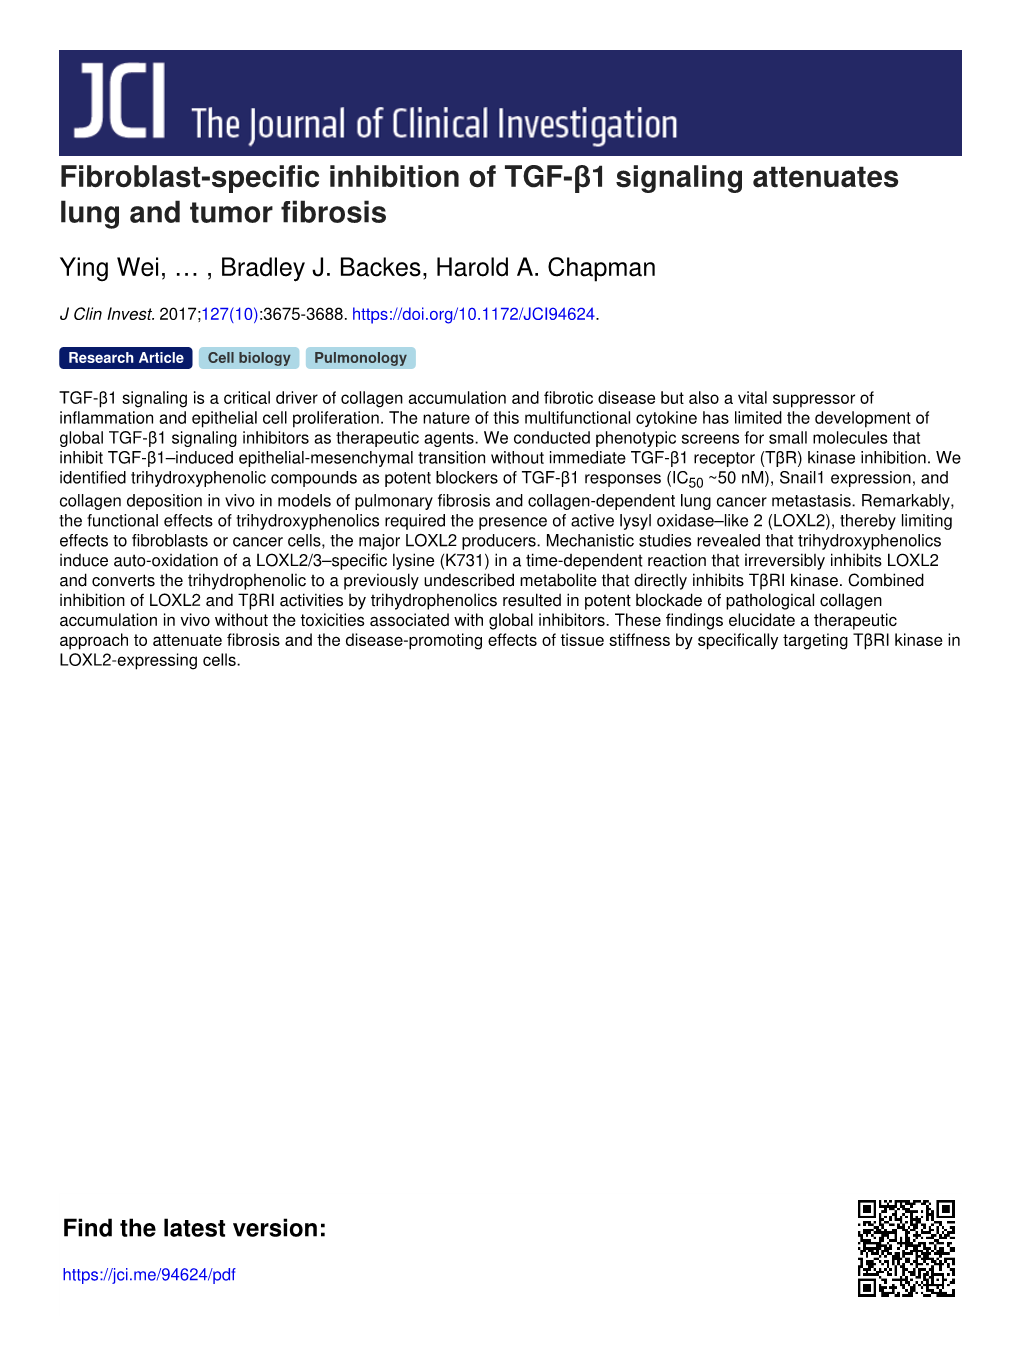 Fibroblast-Specific Inhibition of TGF-Β1 Signaling Attenuates Lung and Tumor Fibrosis